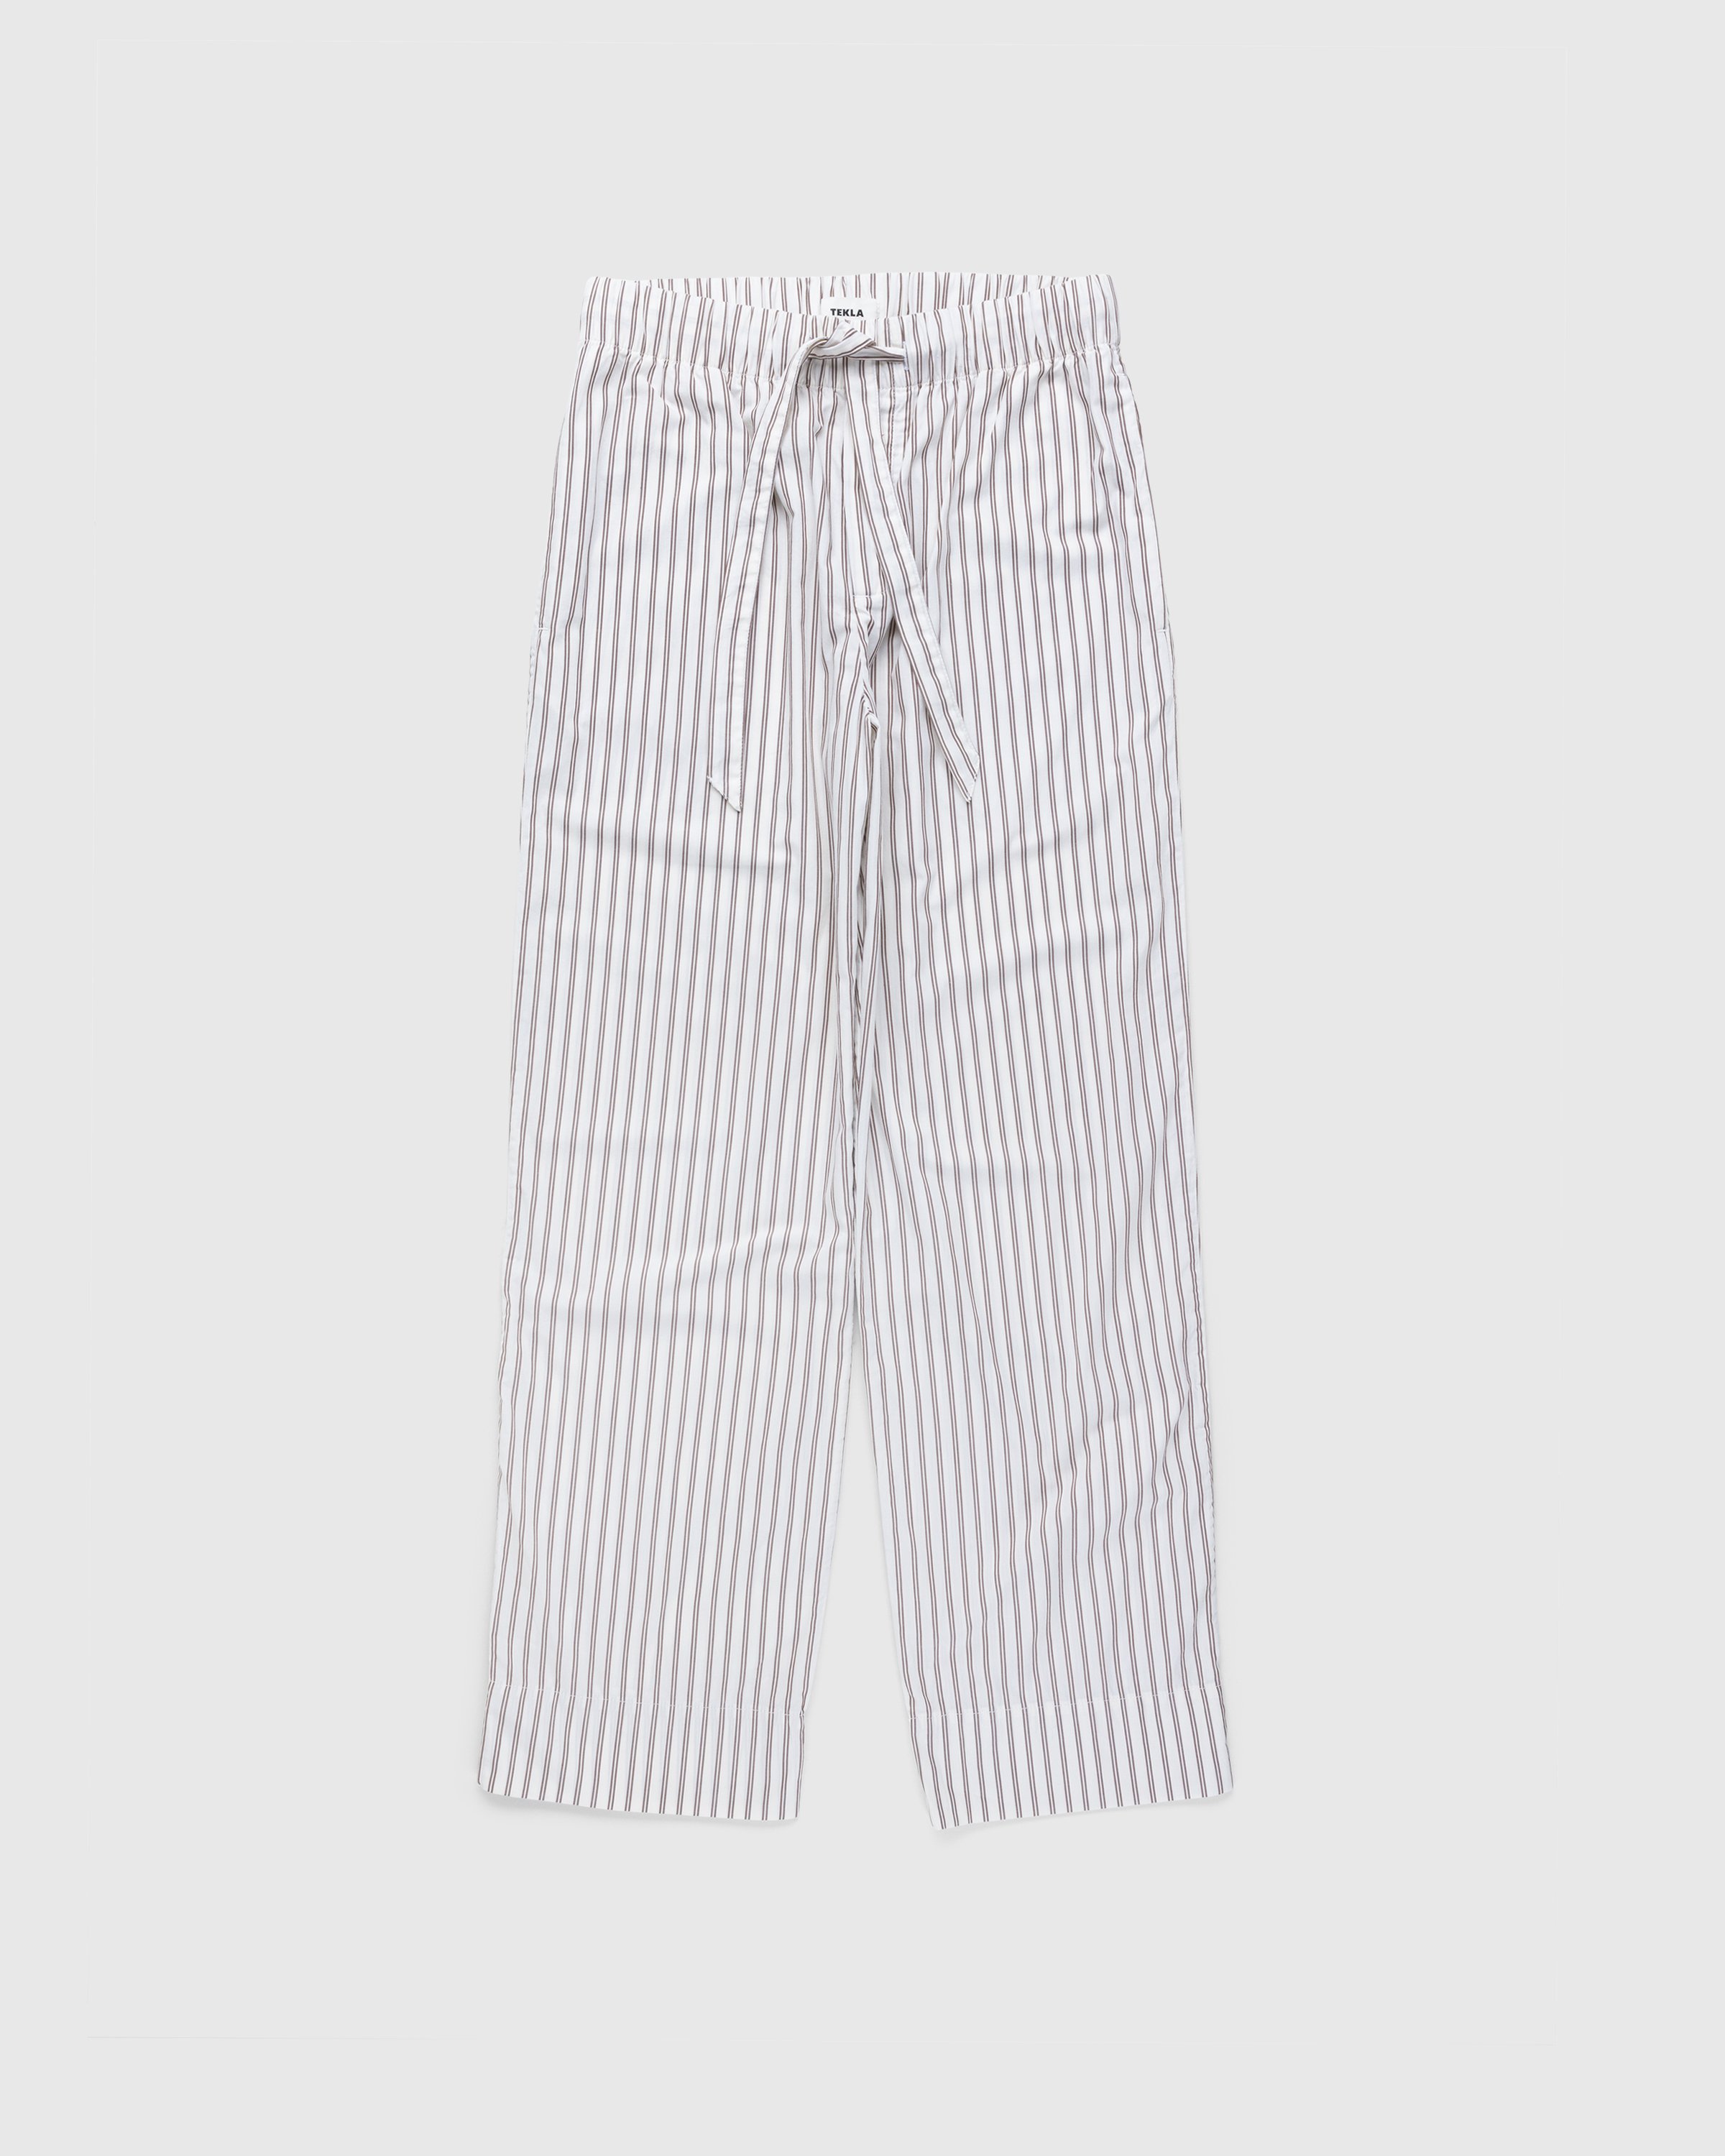 Tekla - Cotton Poplin Pyjamas Pants Hopper Stripes - Clothing - Beige - Image 1